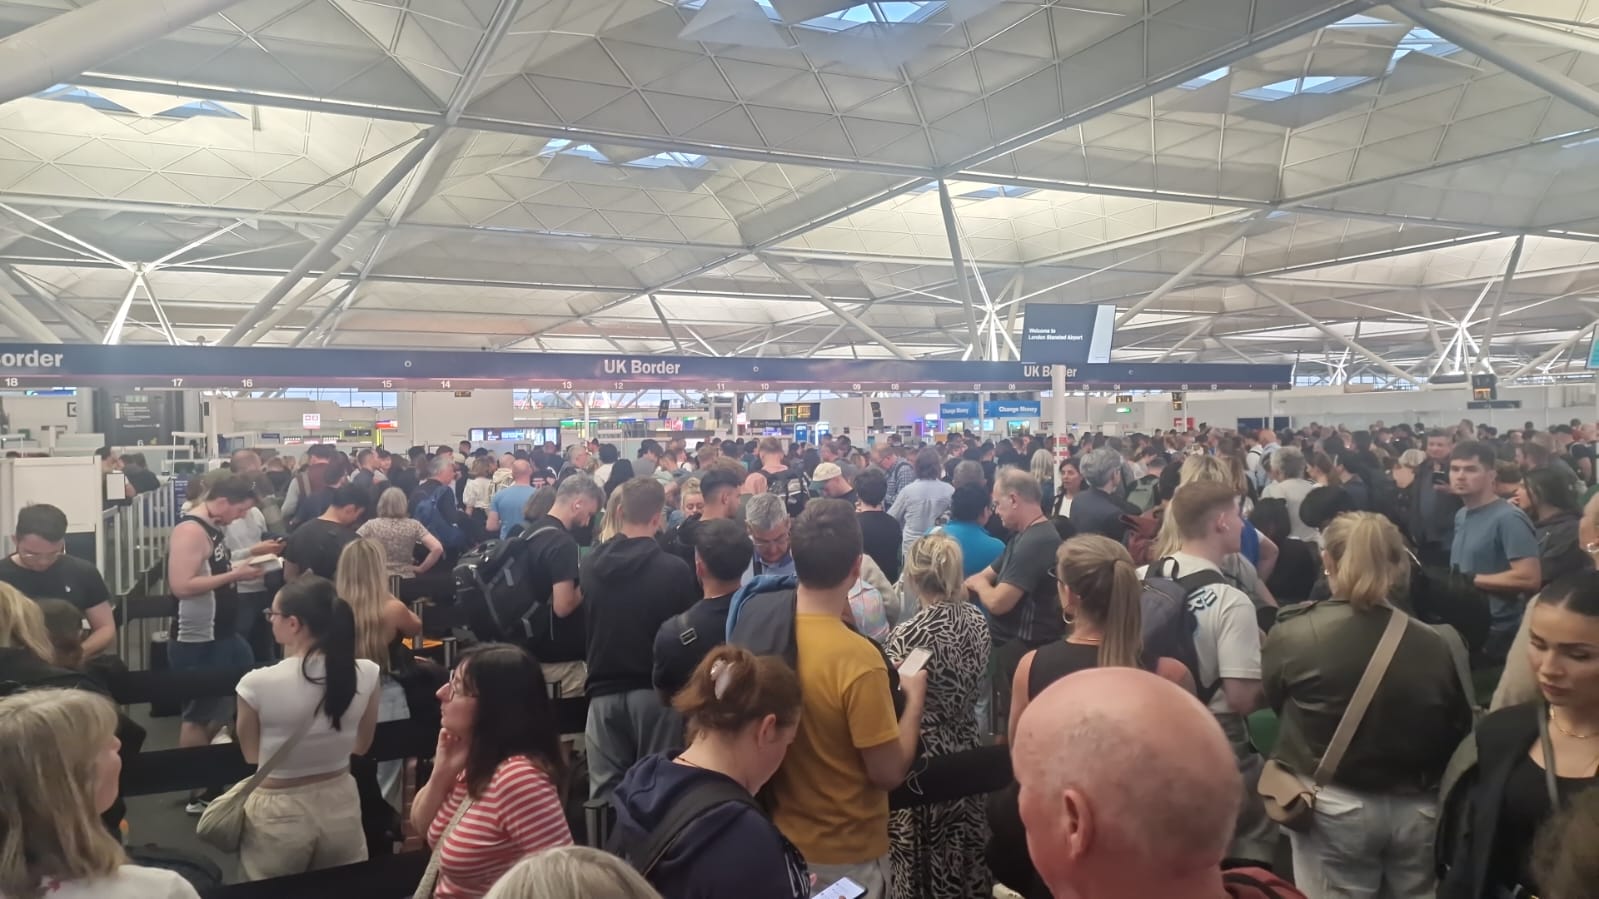 Chaos at Heathrow Airport tonight